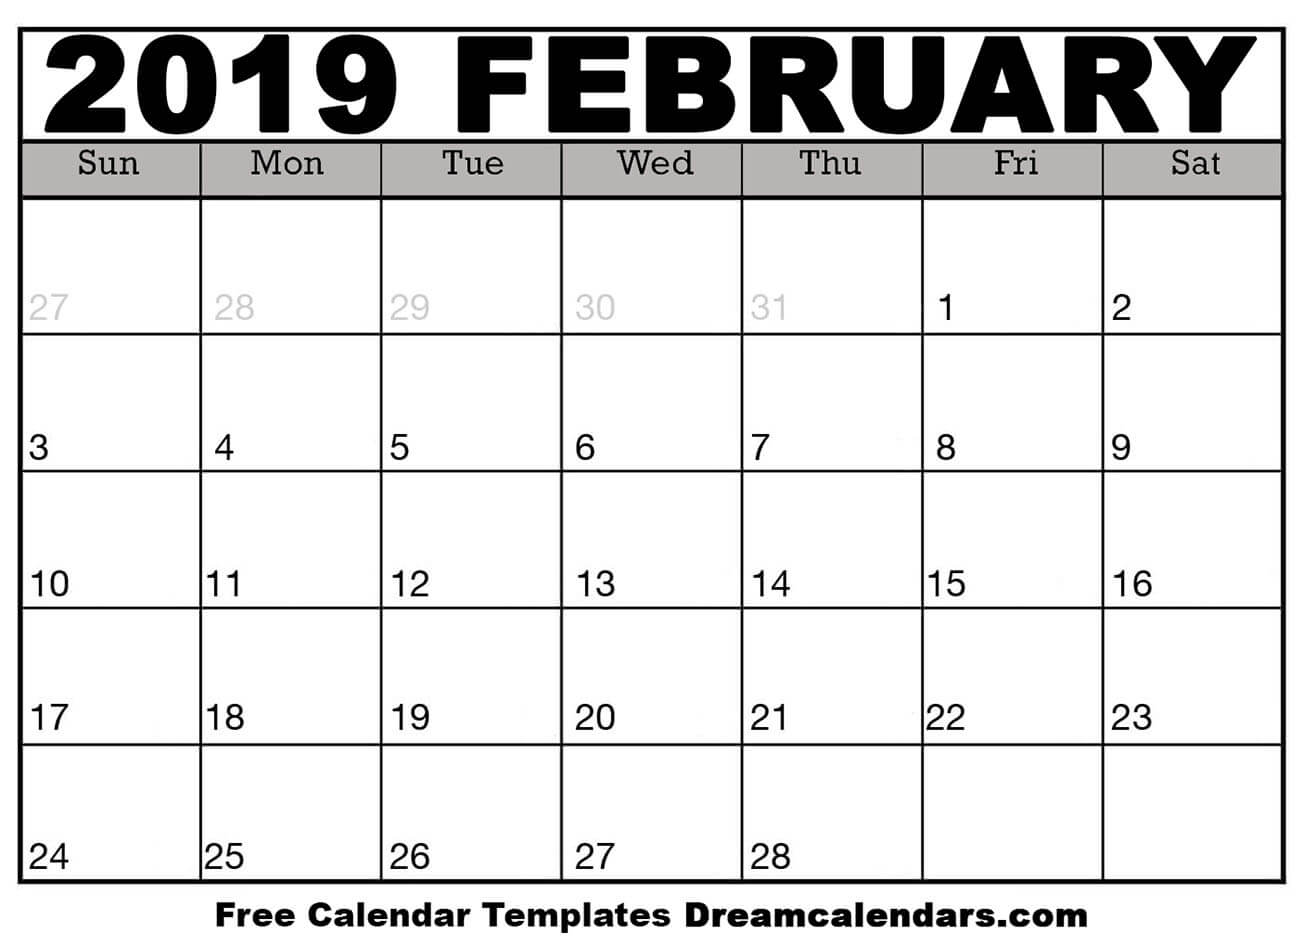 february 2019 calendar free illustrator download